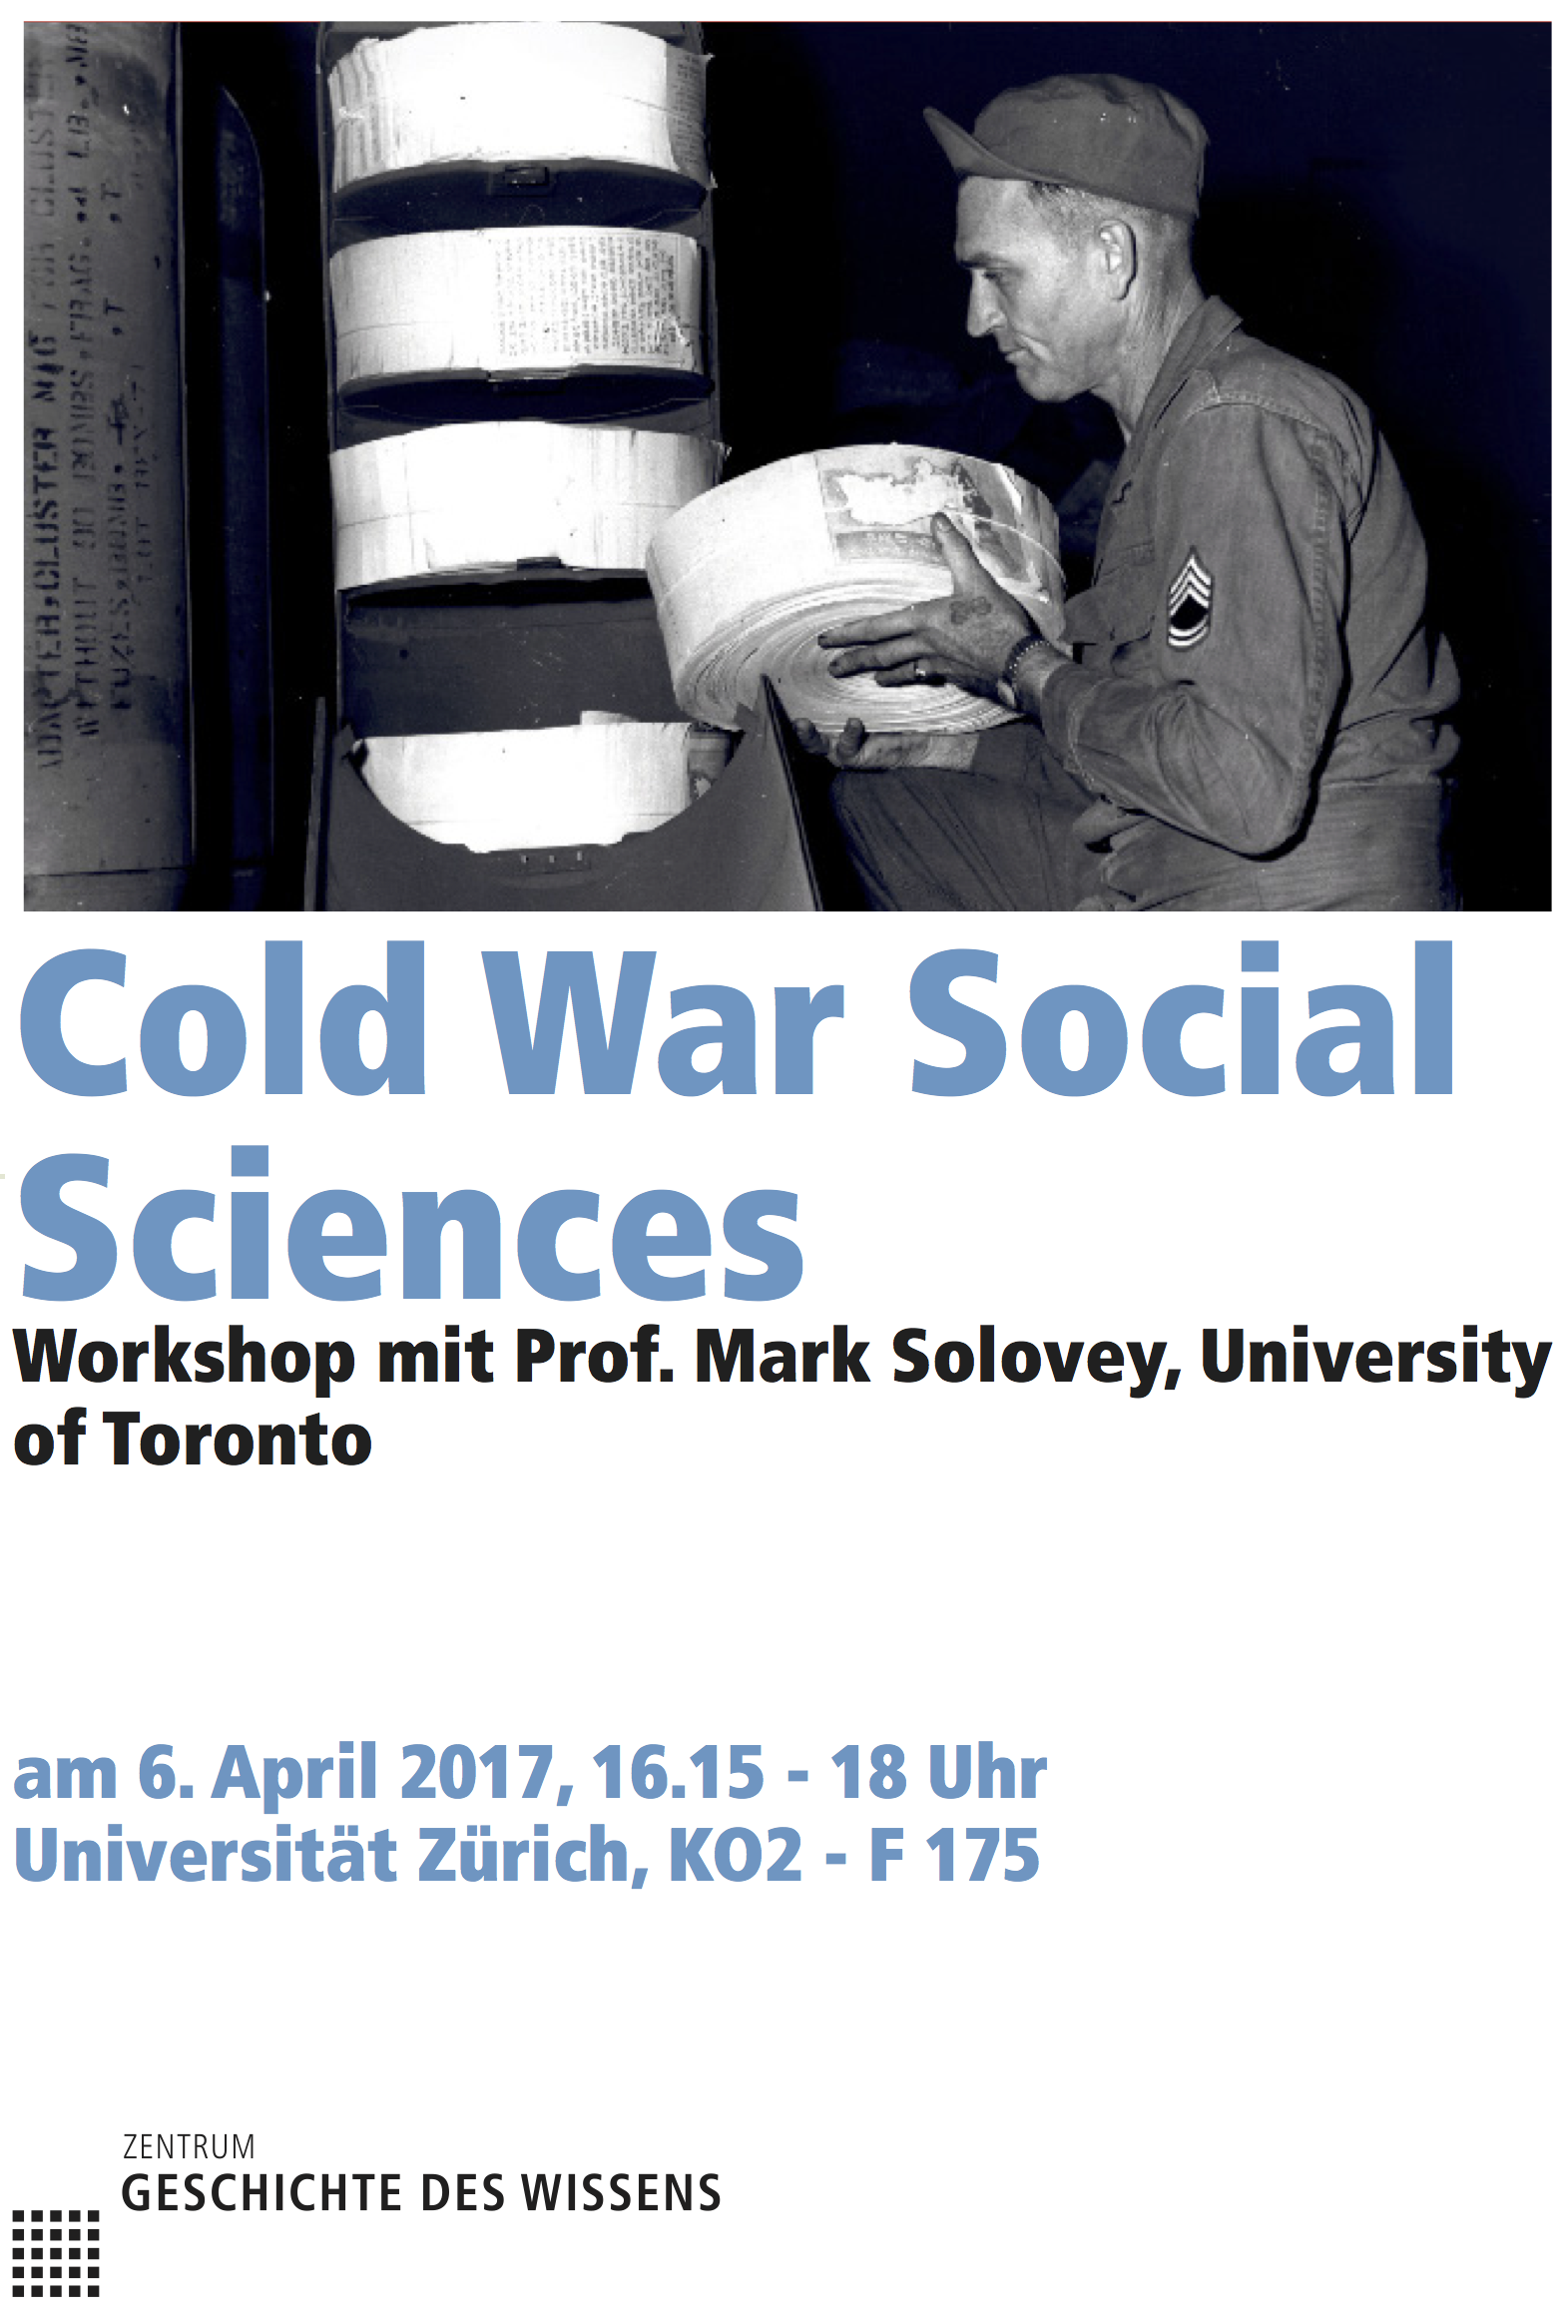 Cold War Social Sciences